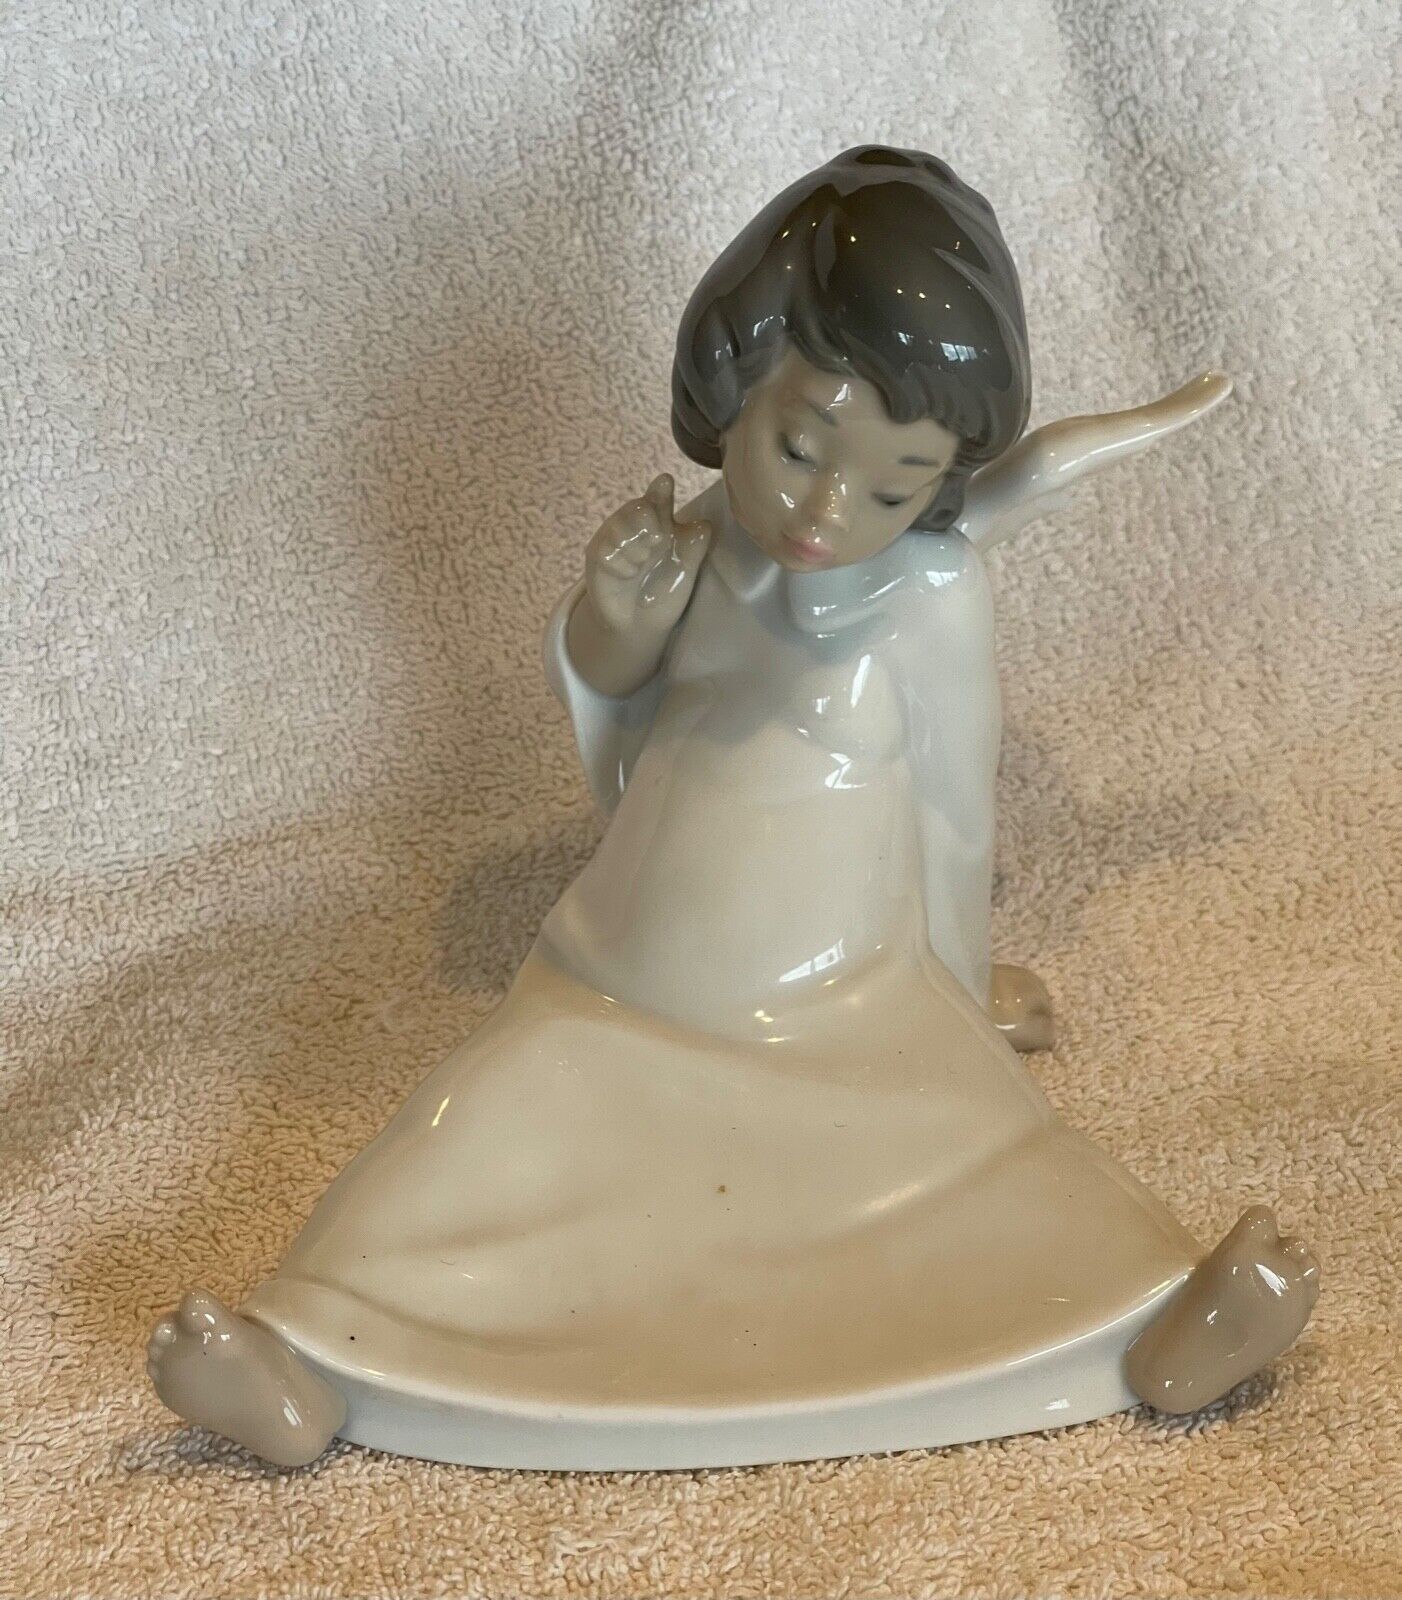 Llardro figurine, large resting dreaming girl child